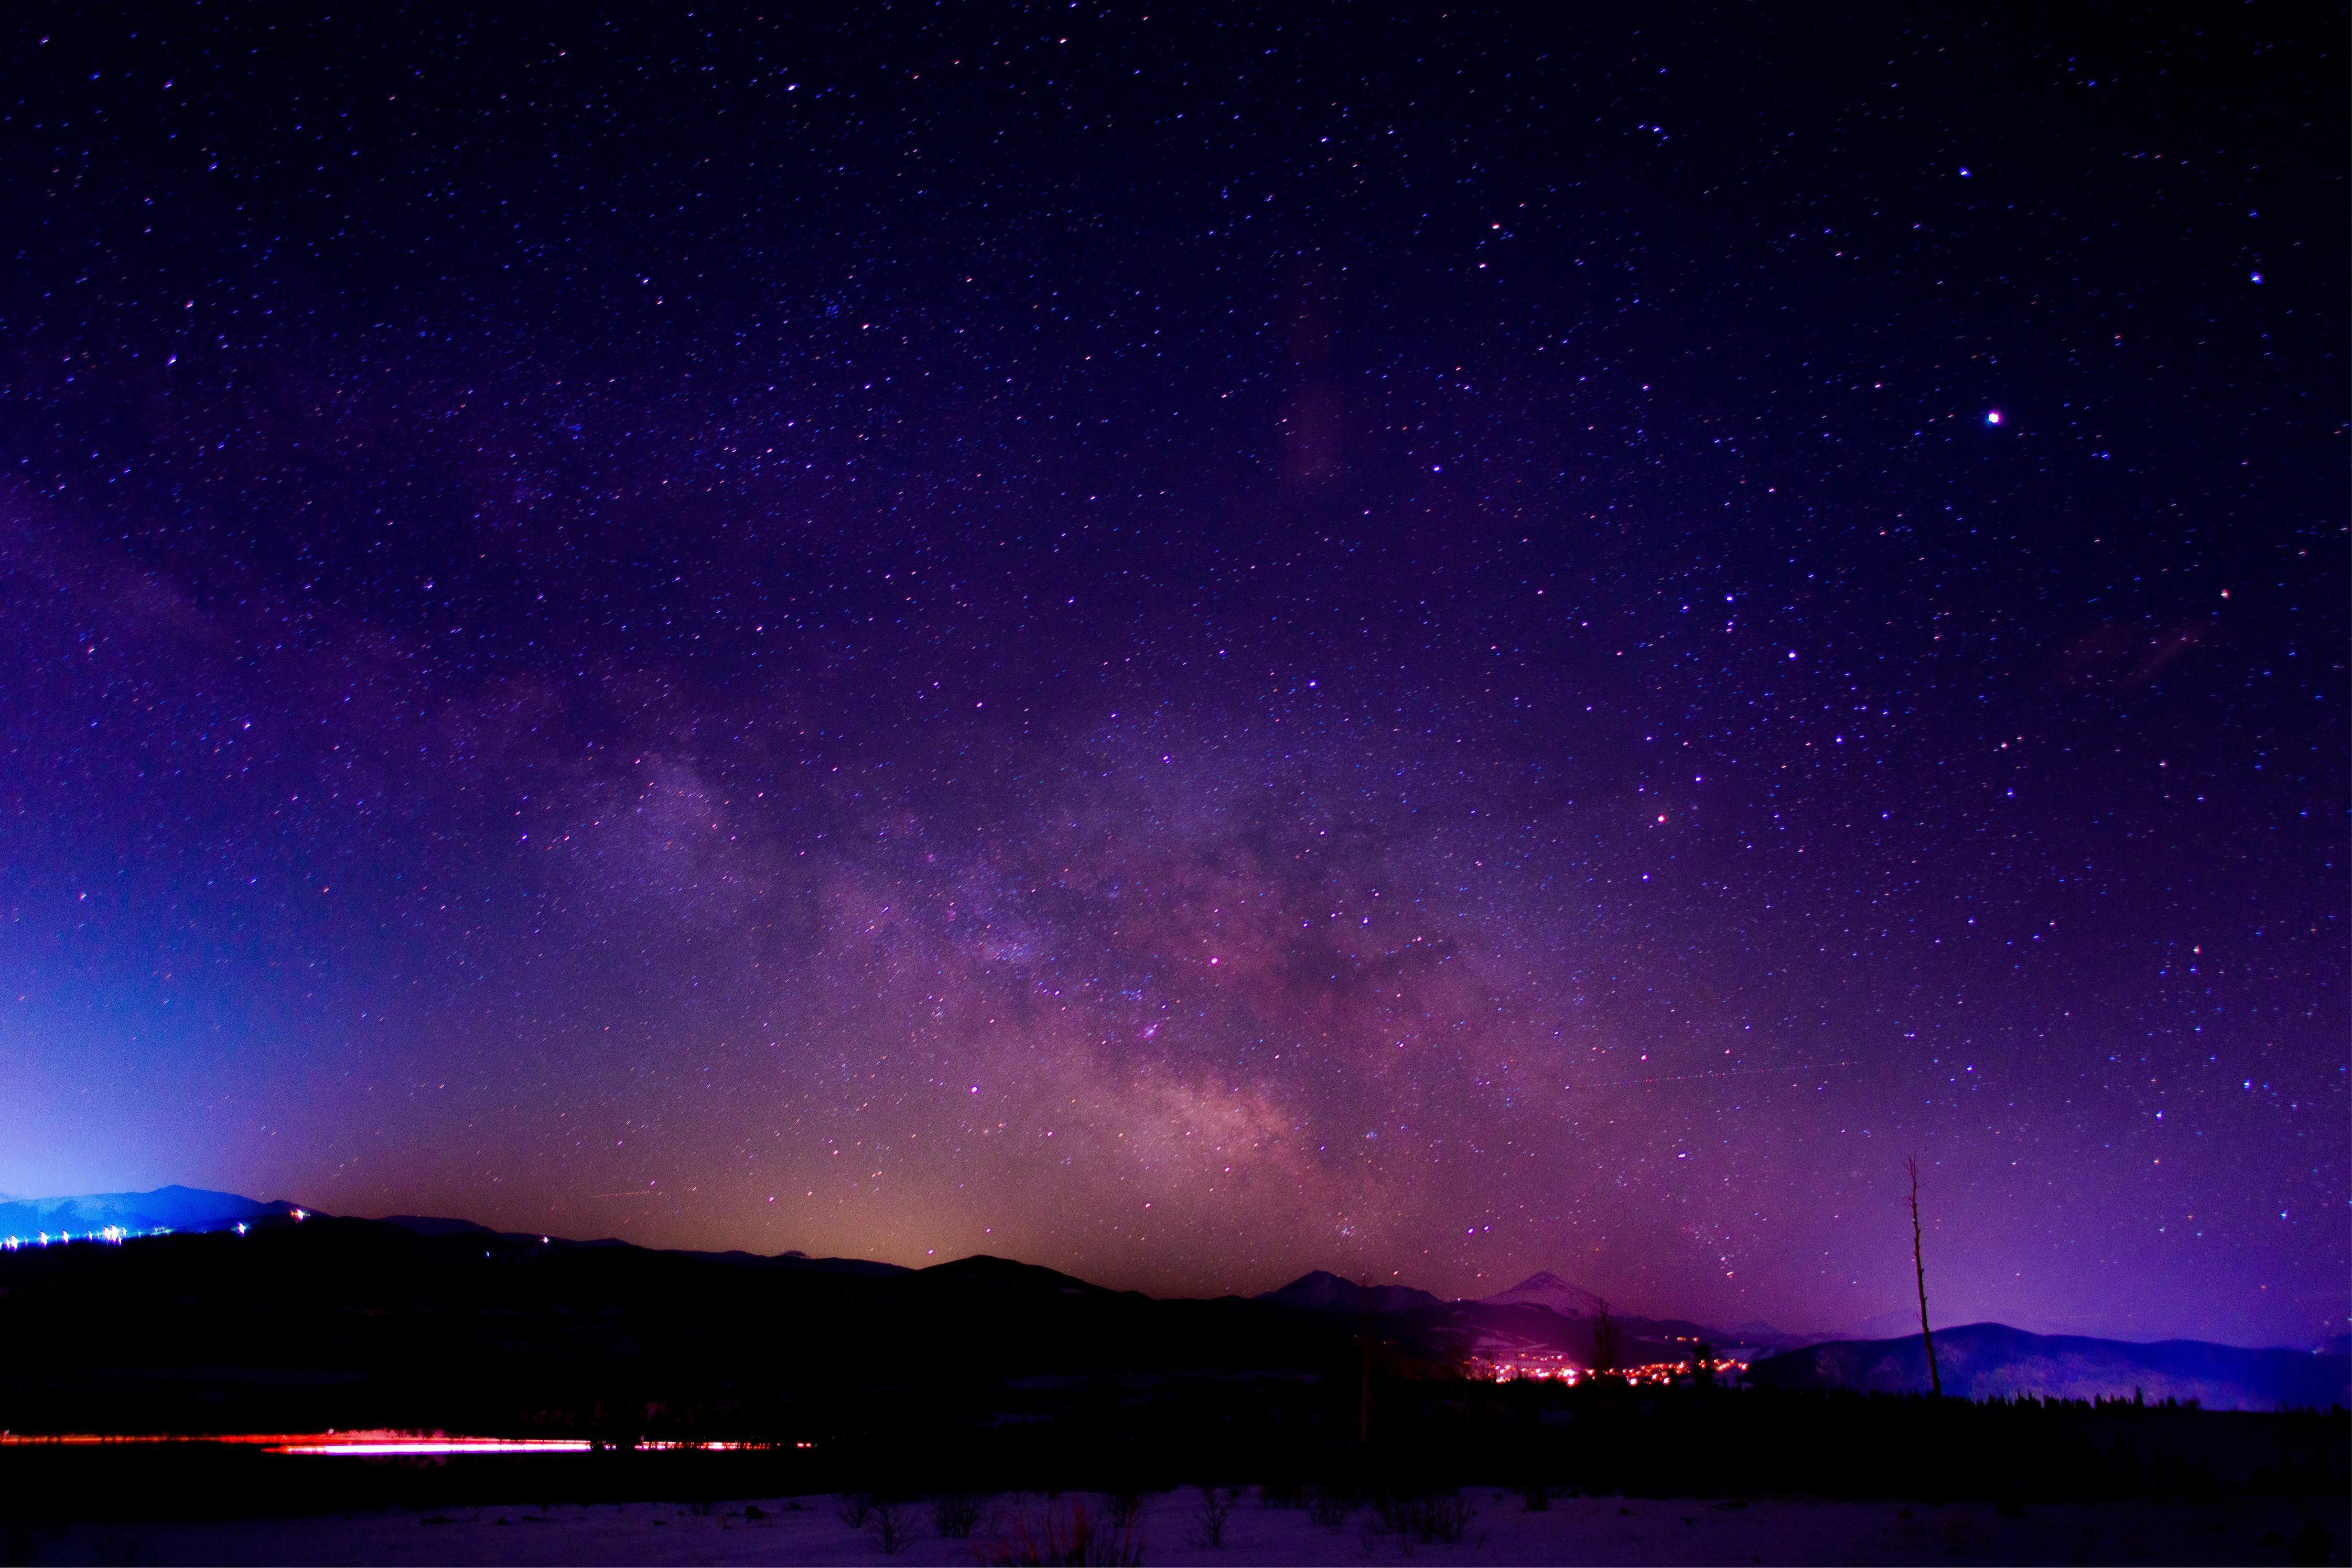 Purple Night Sky Wallpapers - Top Free Purple Night Sky Backgrounds